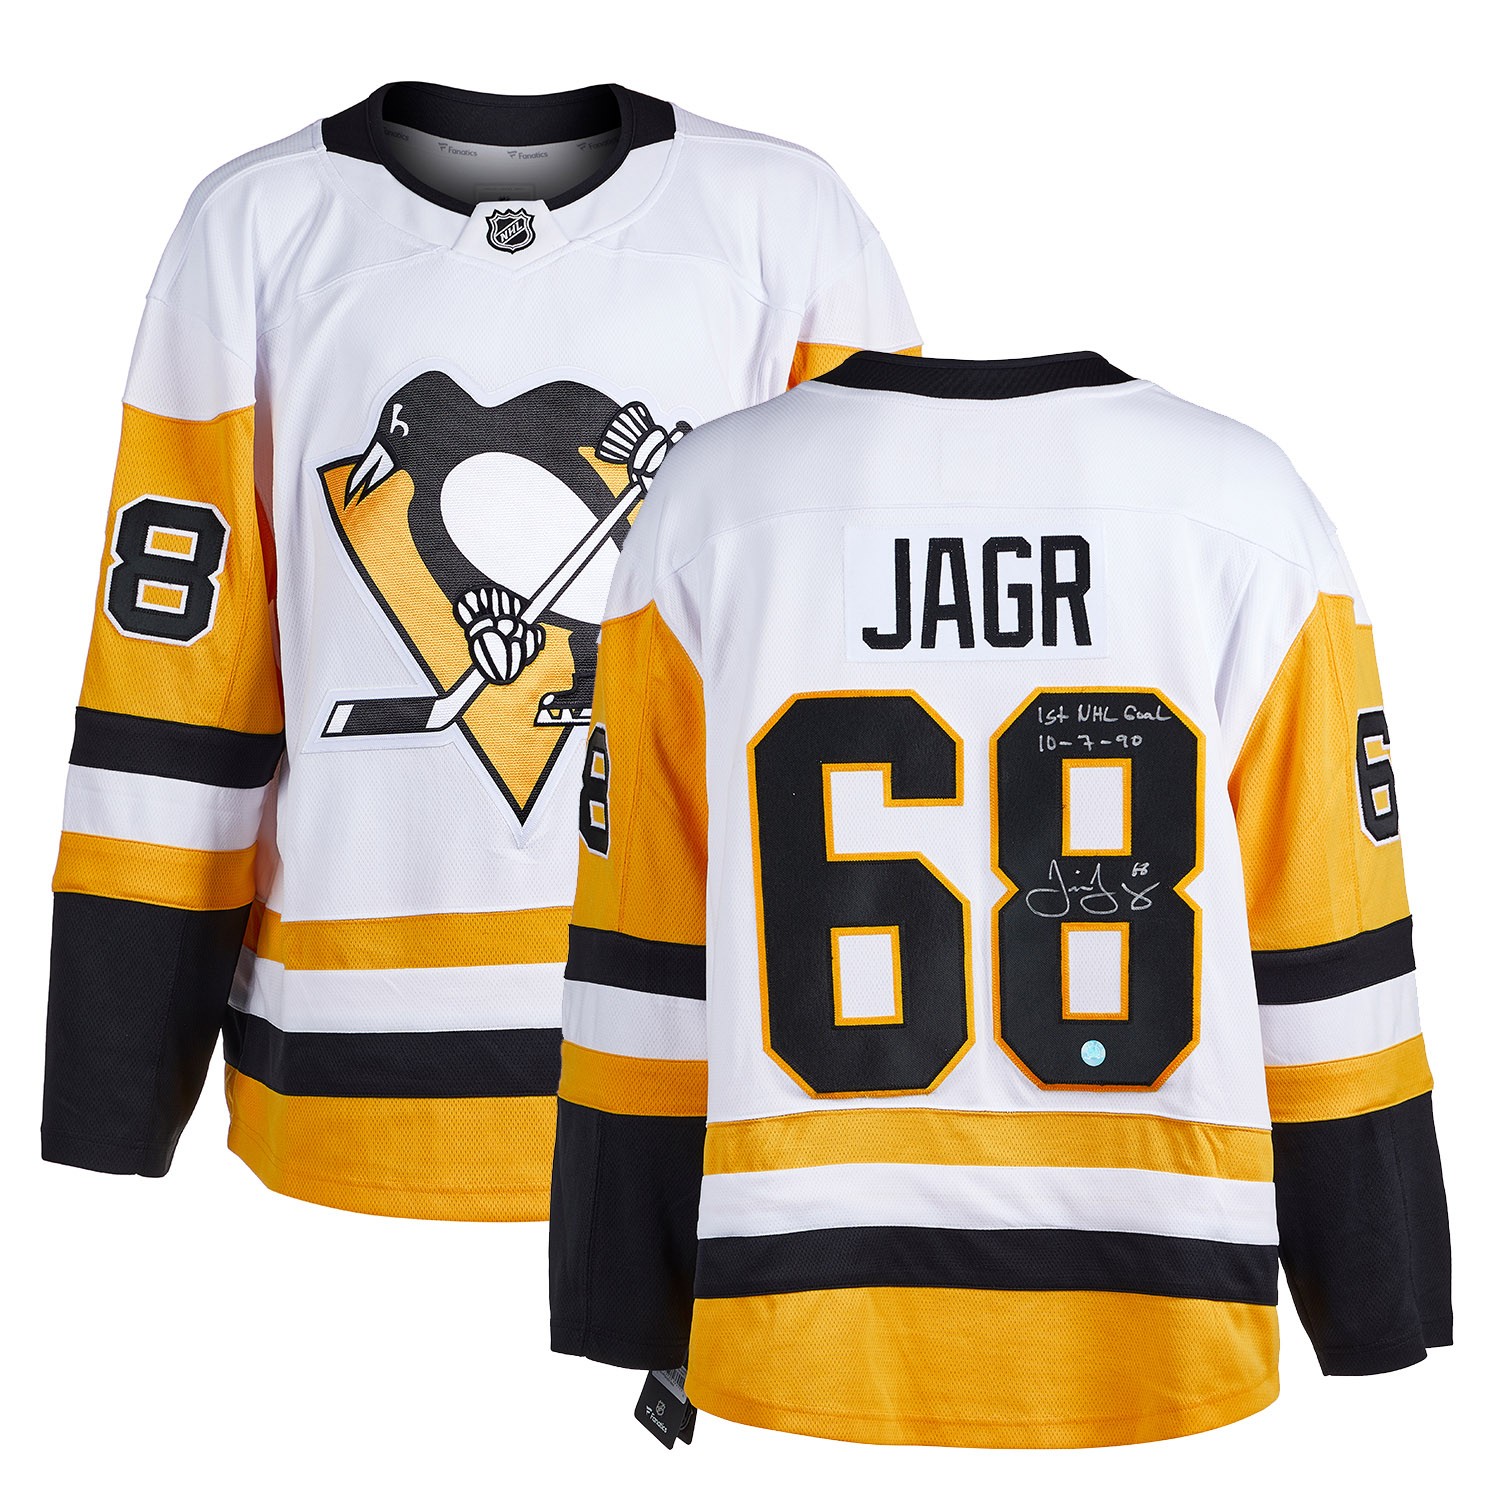 90s Jaromir Jagr NHL Hockey Pittsburgh Penguins t-shirt Large